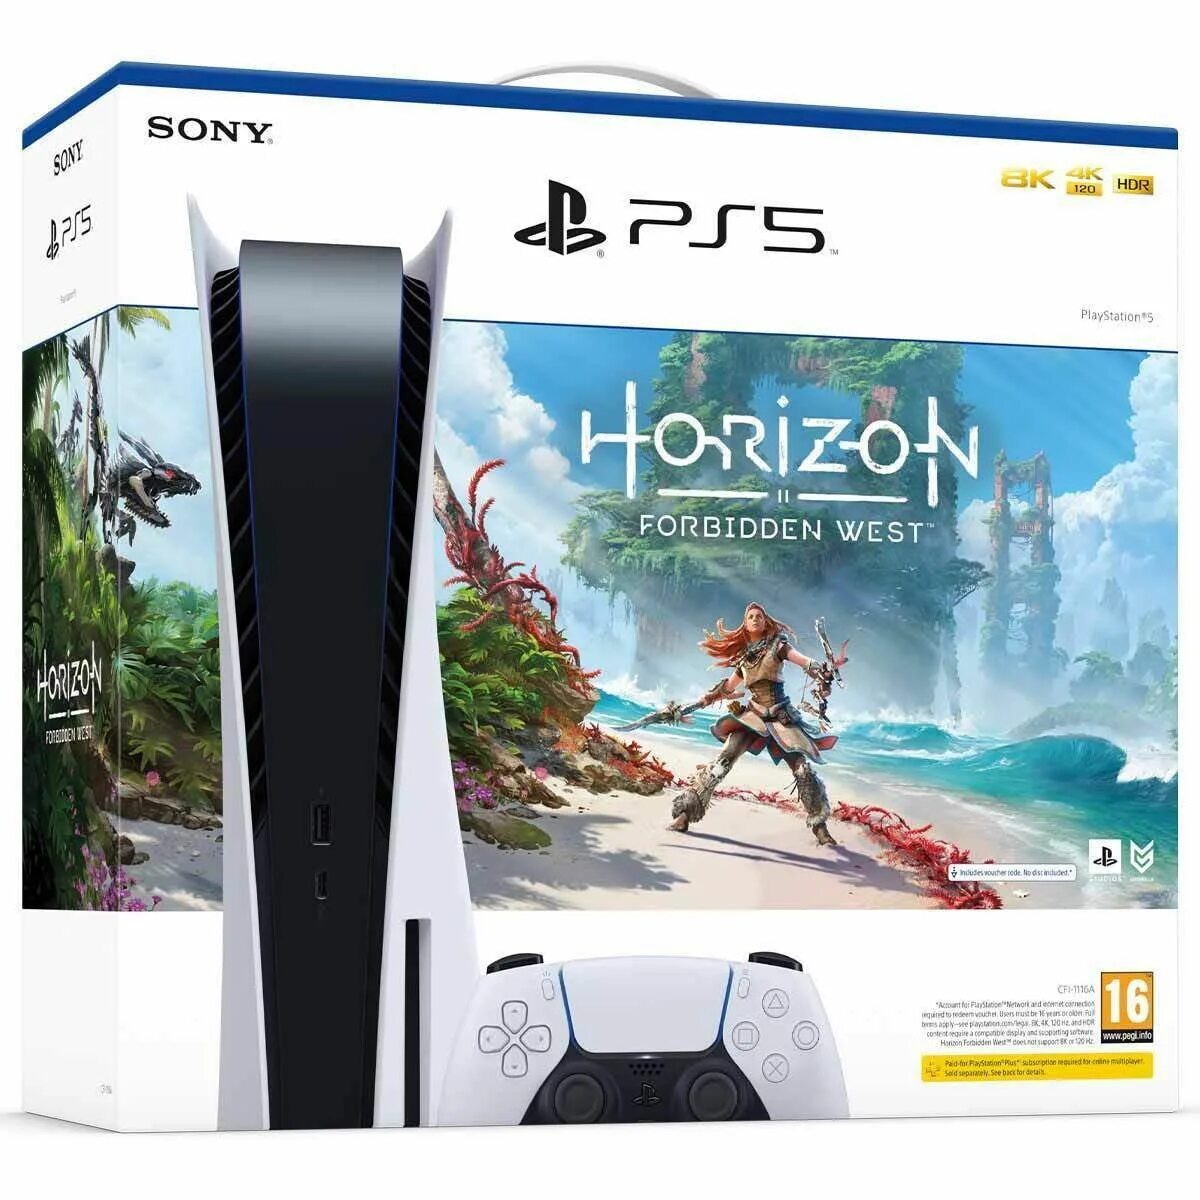 Игра horizon ps5. Sony PLAYSTATION 5 Blu-ray Edition. Sony PLAYSTATION ps5 Console. PLAYSTATION 5 Horizon Forbidden West Bundle. CFI-1116a PLAYSTATION 5.